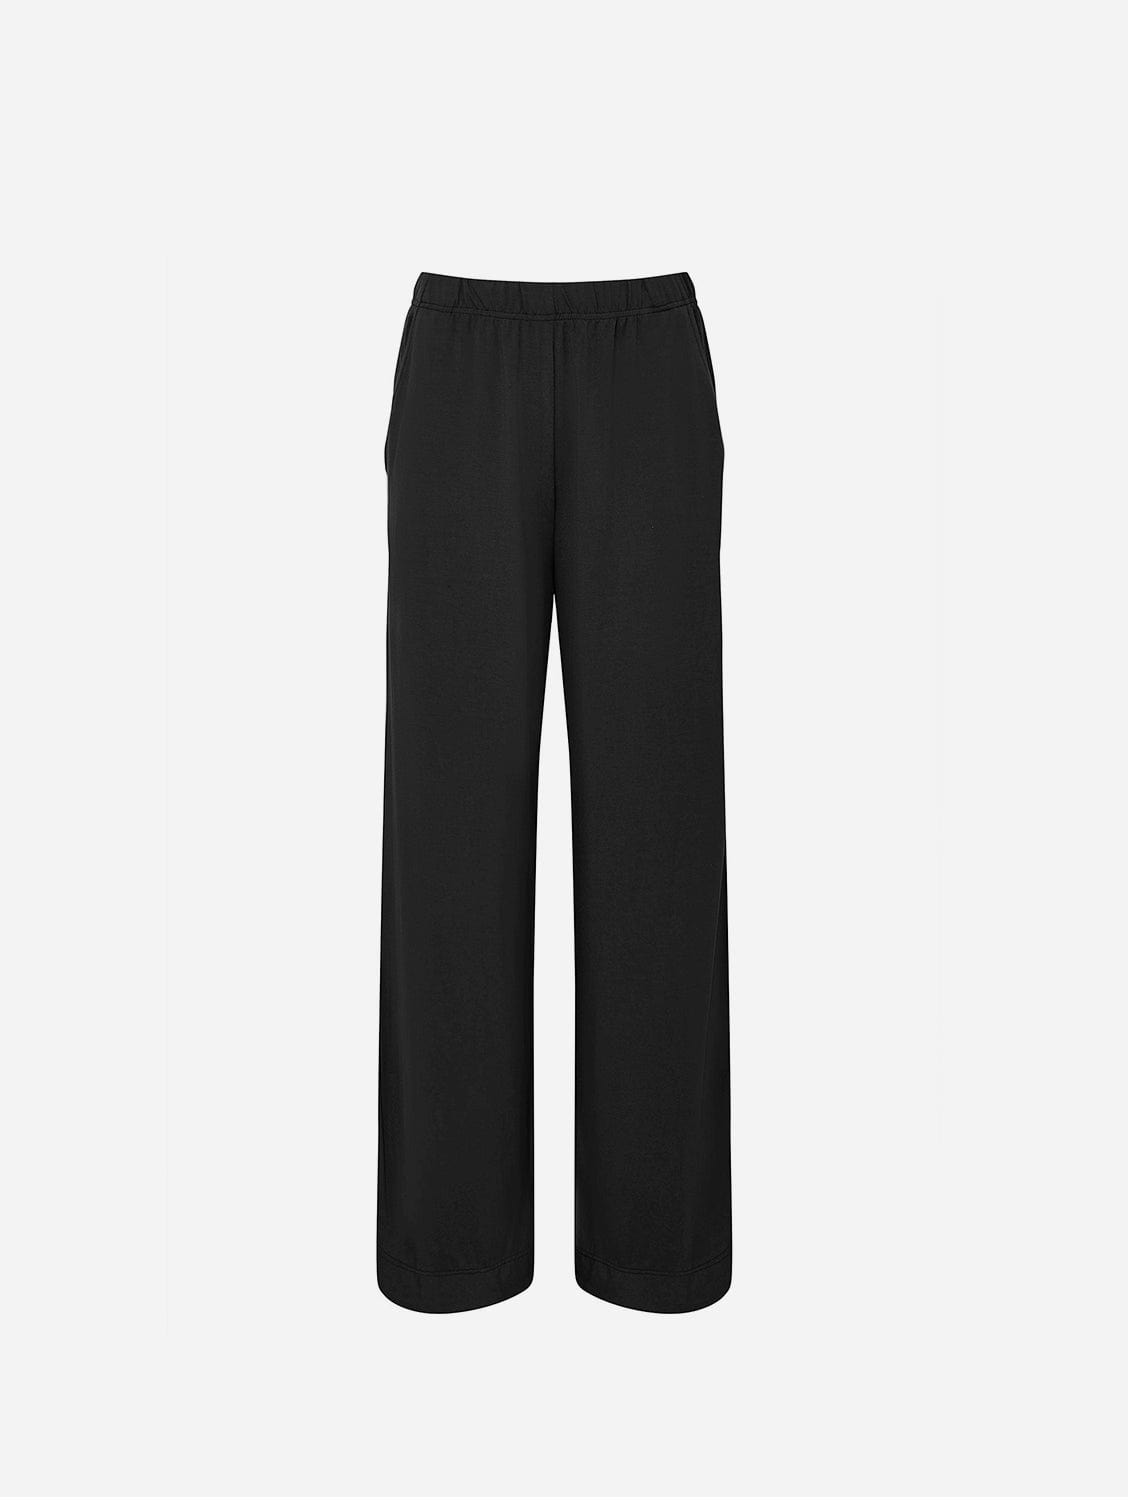 KOMODO BINITA - Lenzing trousers black SIZE 1 / UK 8 / EUR 36